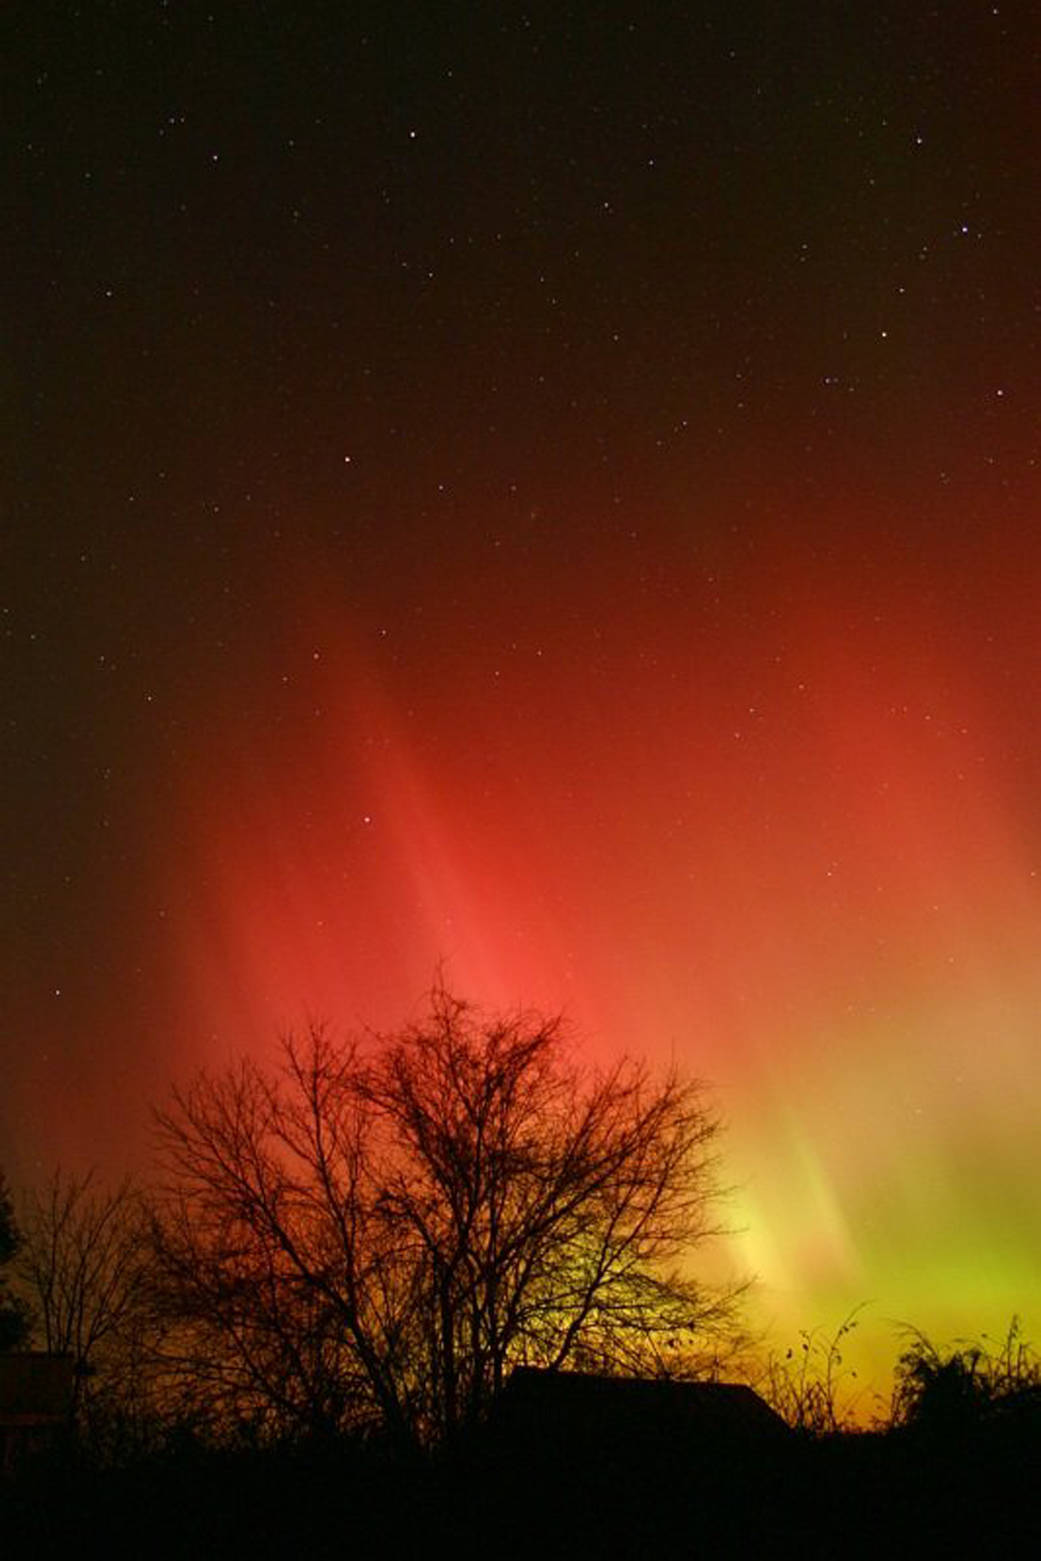 This aurora image was taken in Plymouth, Ohio on Nov. 7, 2004.